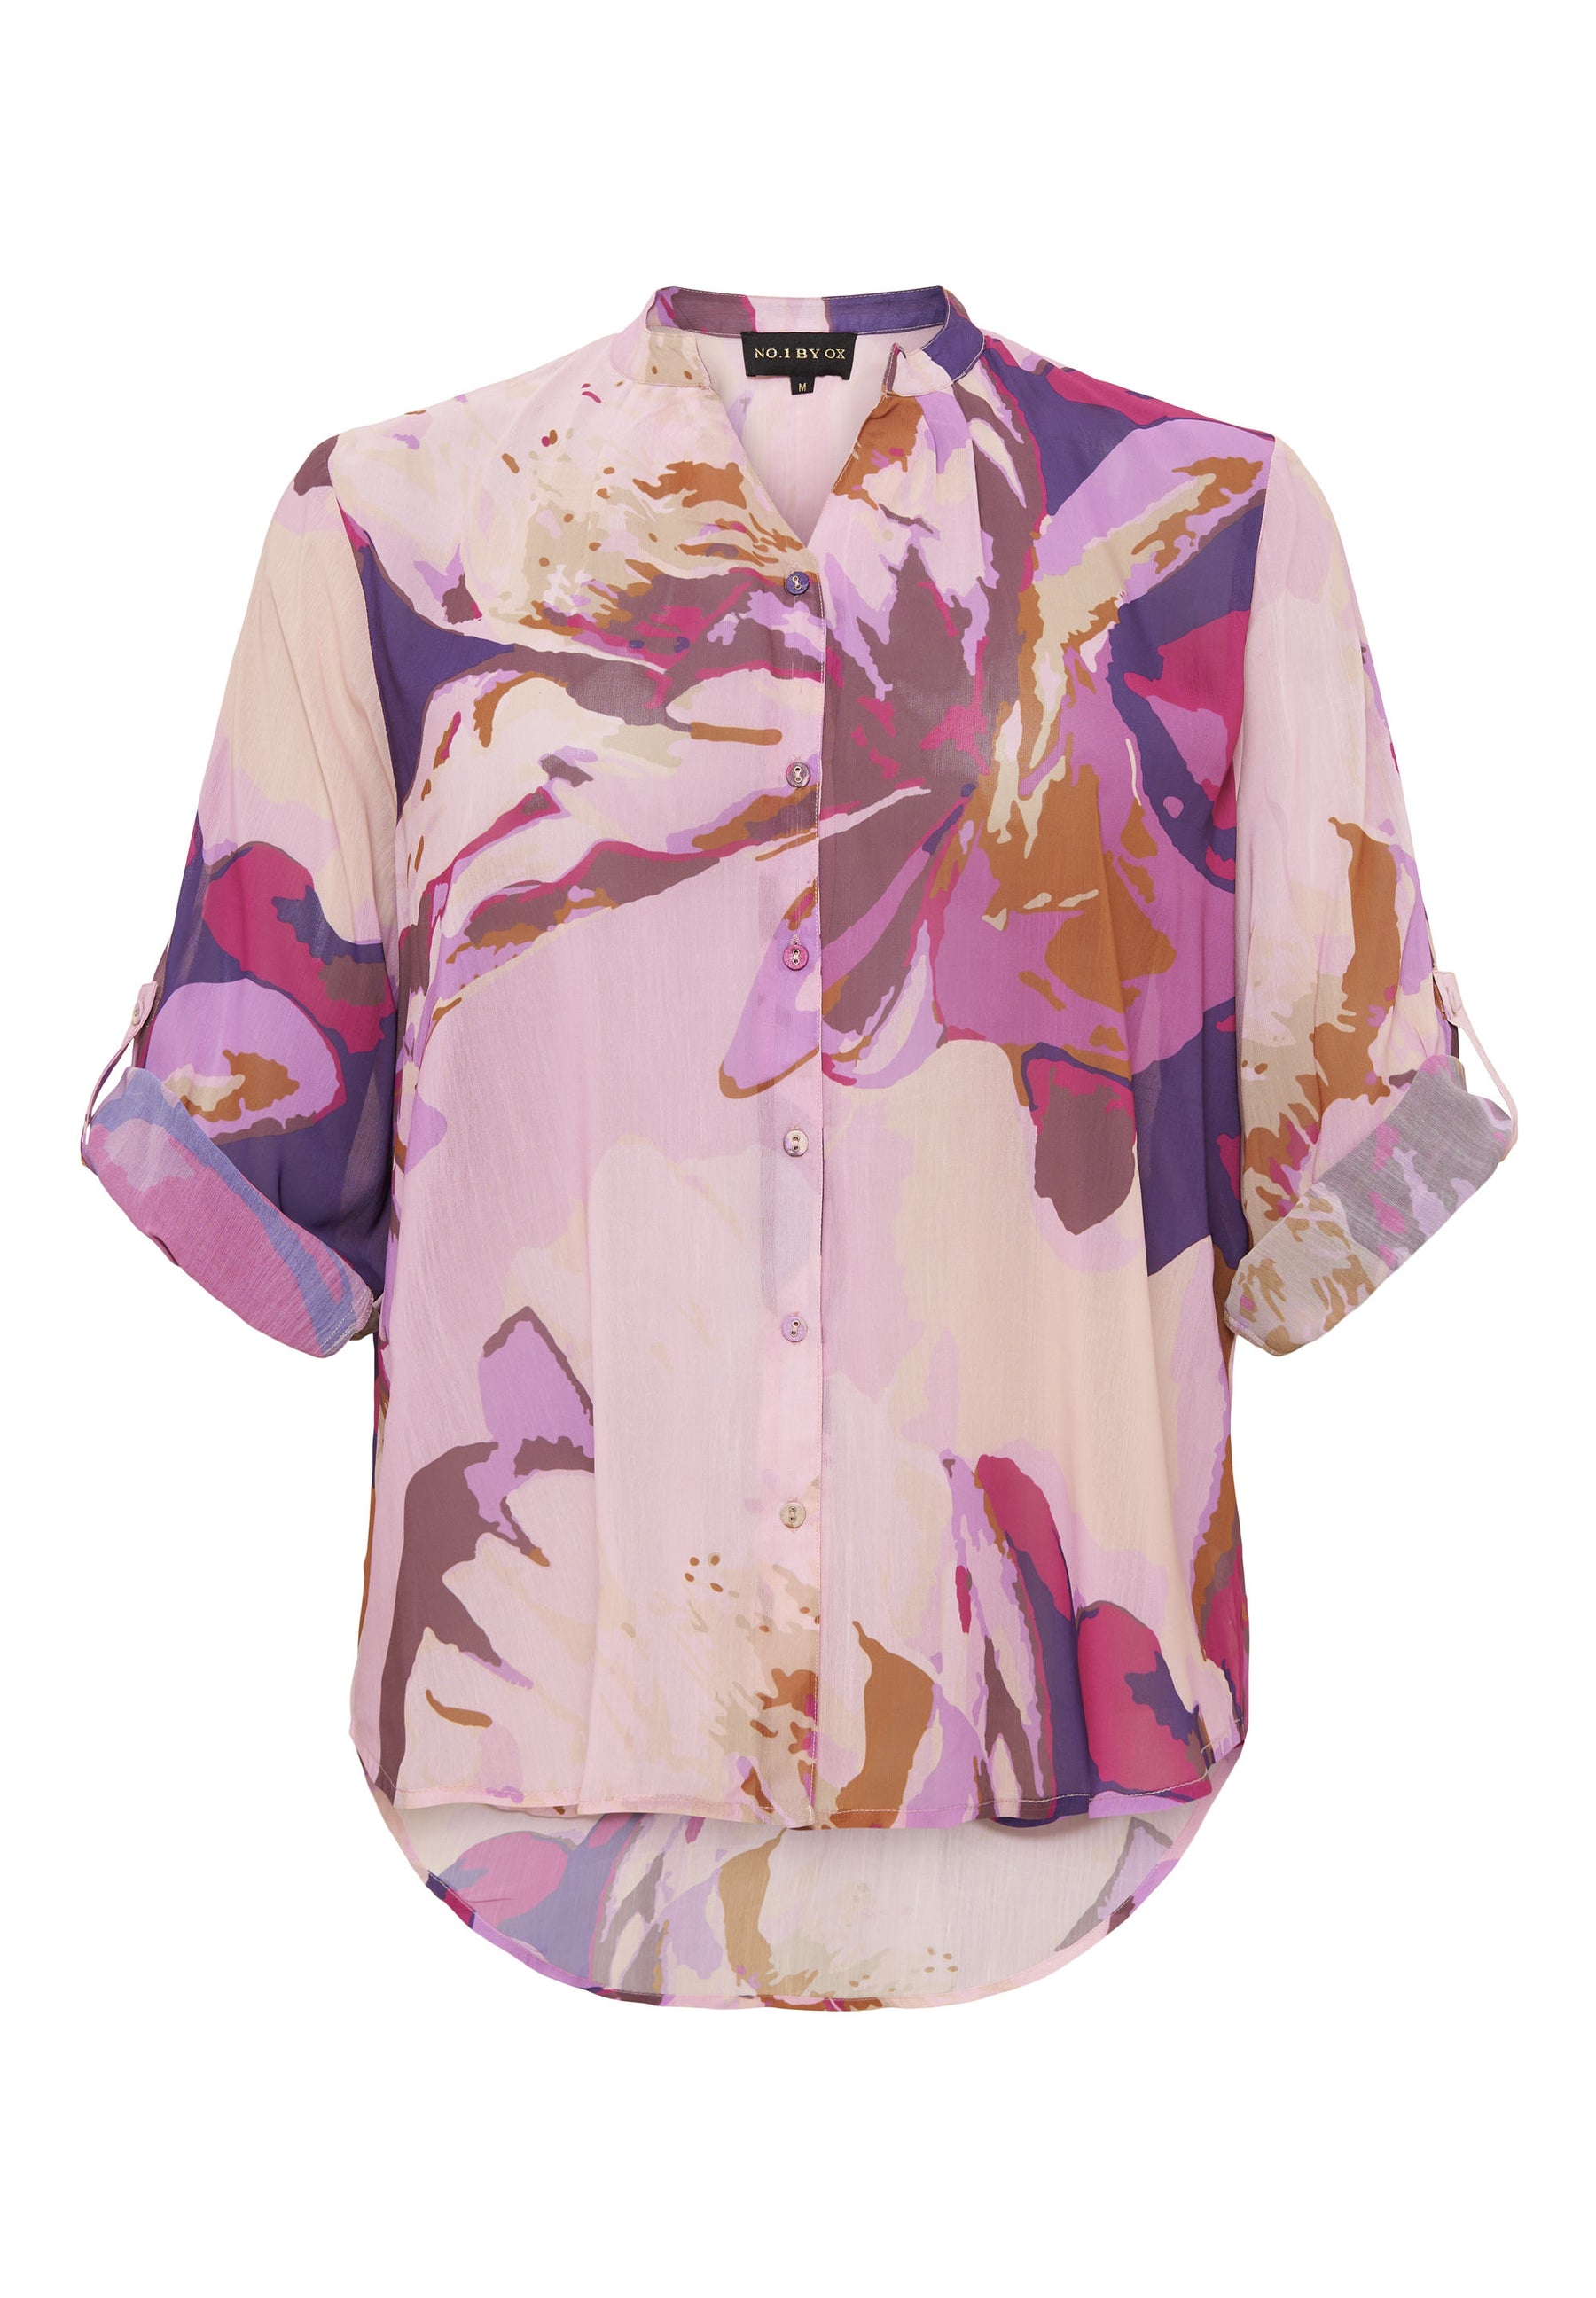 NO. 1 BY OX Chiffon bluse med knapper Skjorter Rose w Dark Purple Flowers